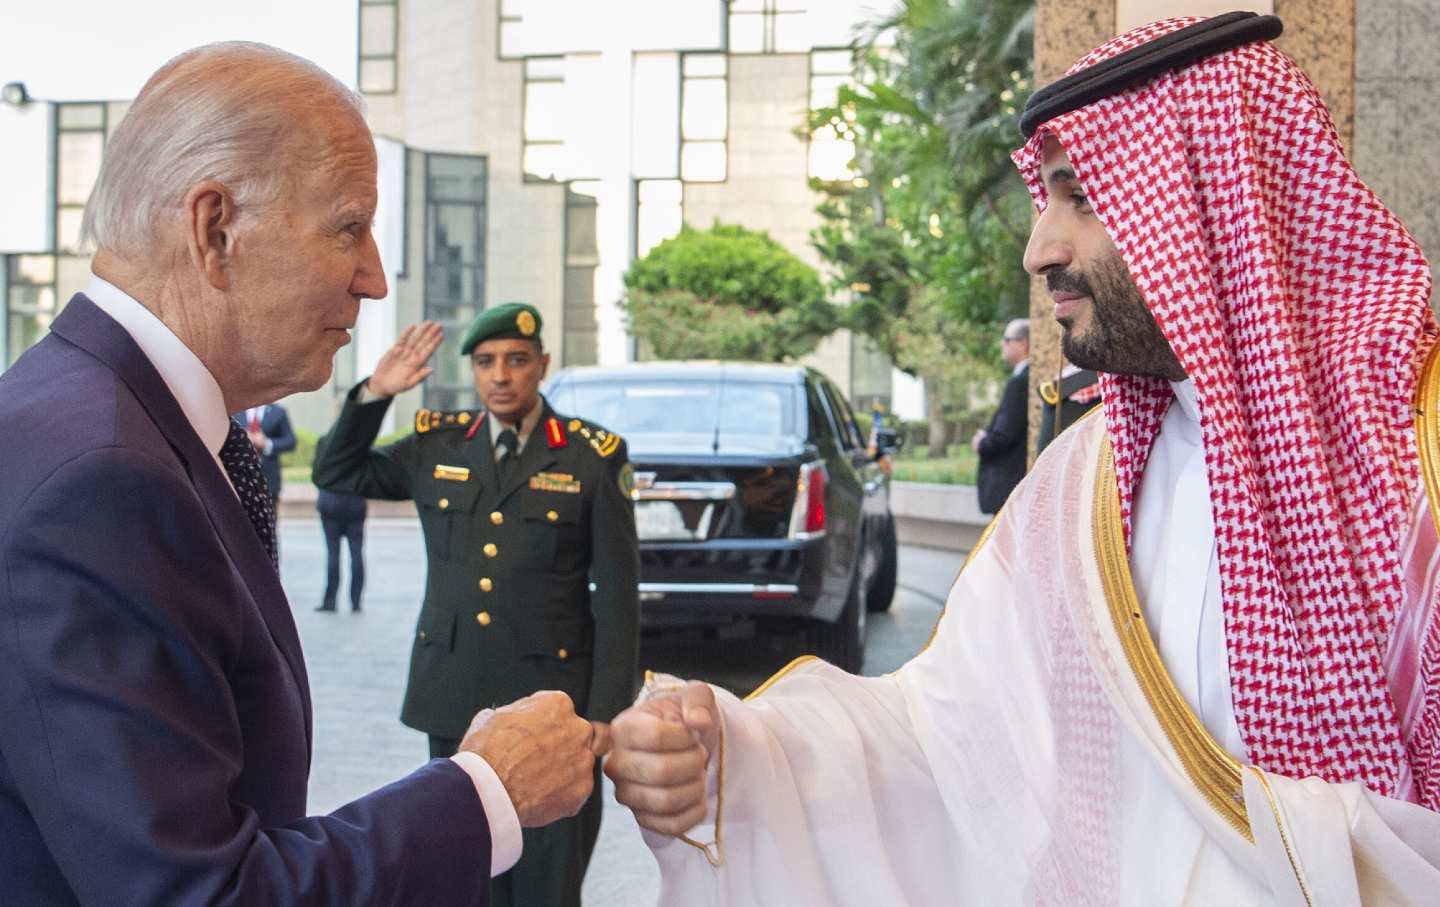 Joe Biden, left, fist bumps with Saudi Arabian Crown Prince Mohammed bin Salman at the Royal Palace.